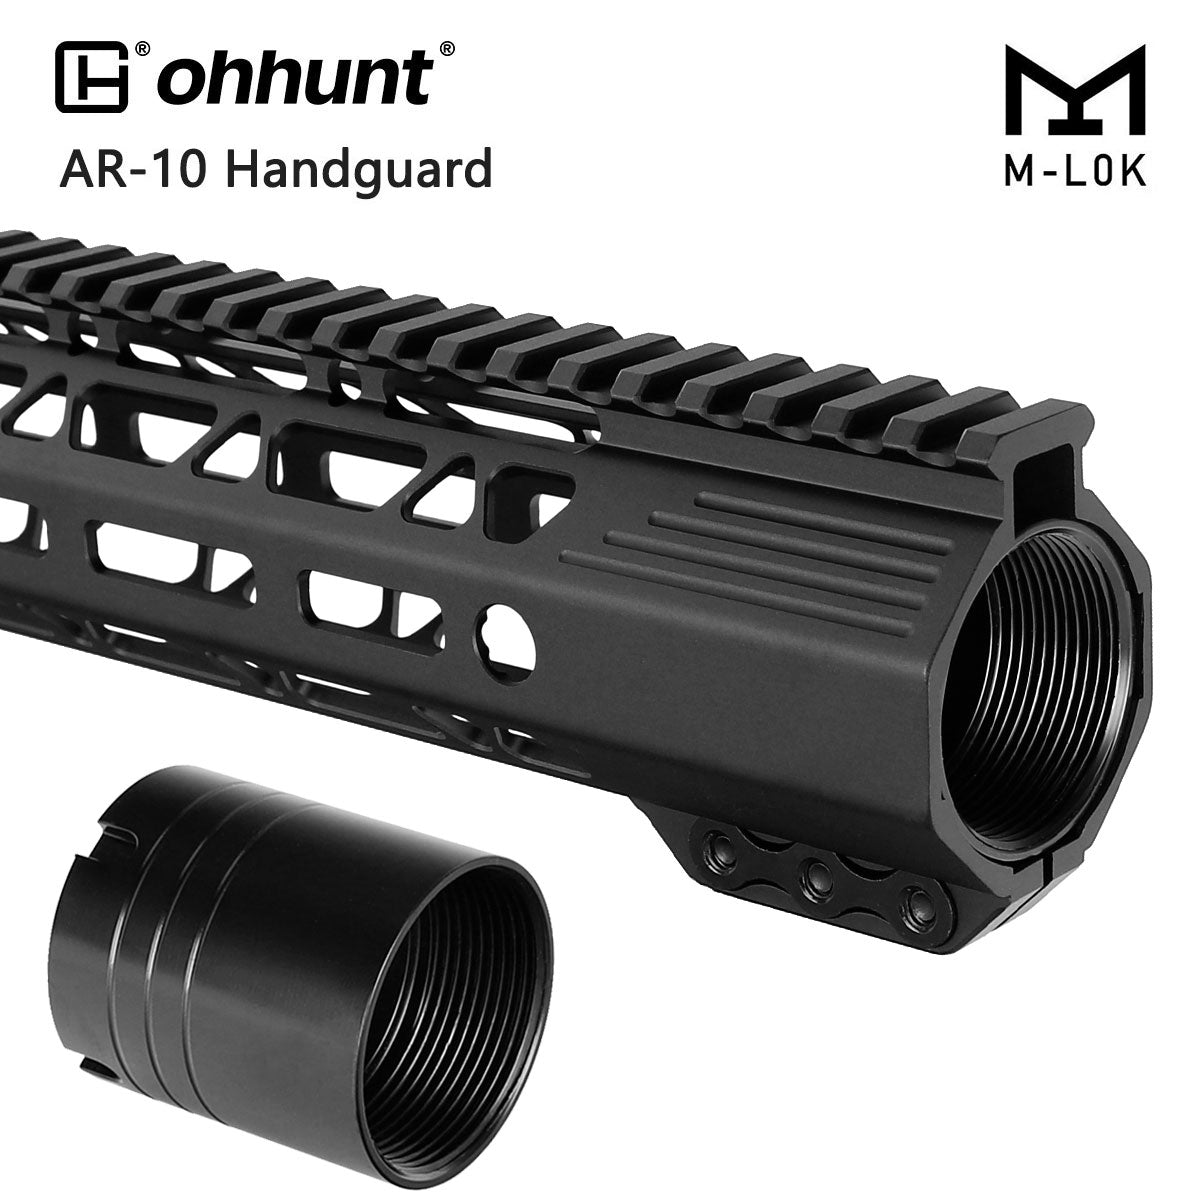 ohhunt® AR10 Handguard Lightweight & Slim Desigh - 15 inch